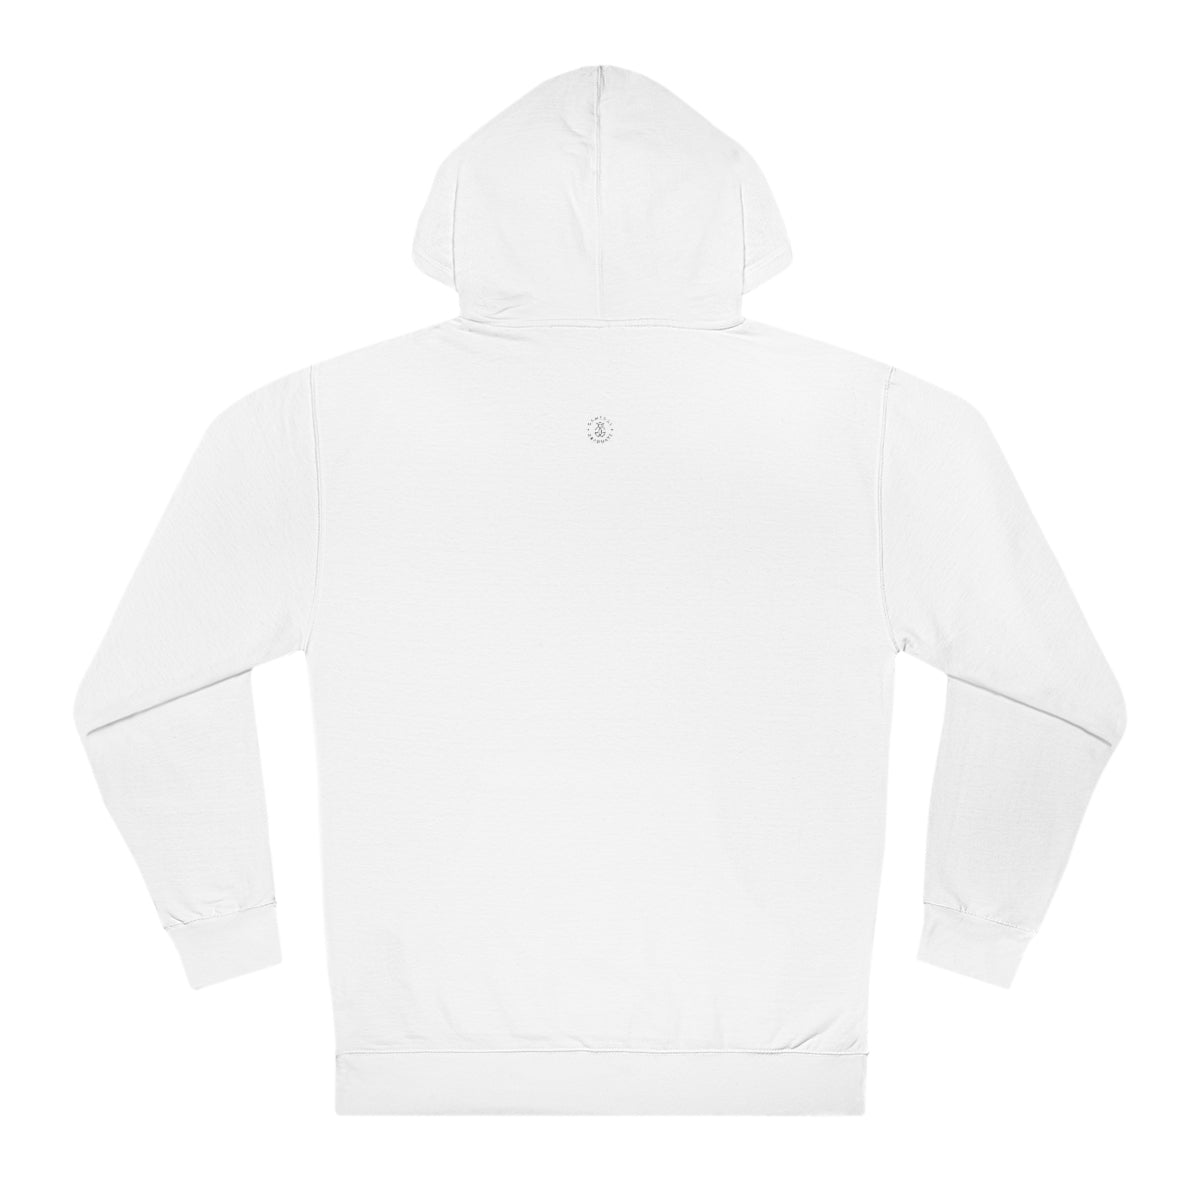 Penn State Hooded Sweatshirt - GG - ITC